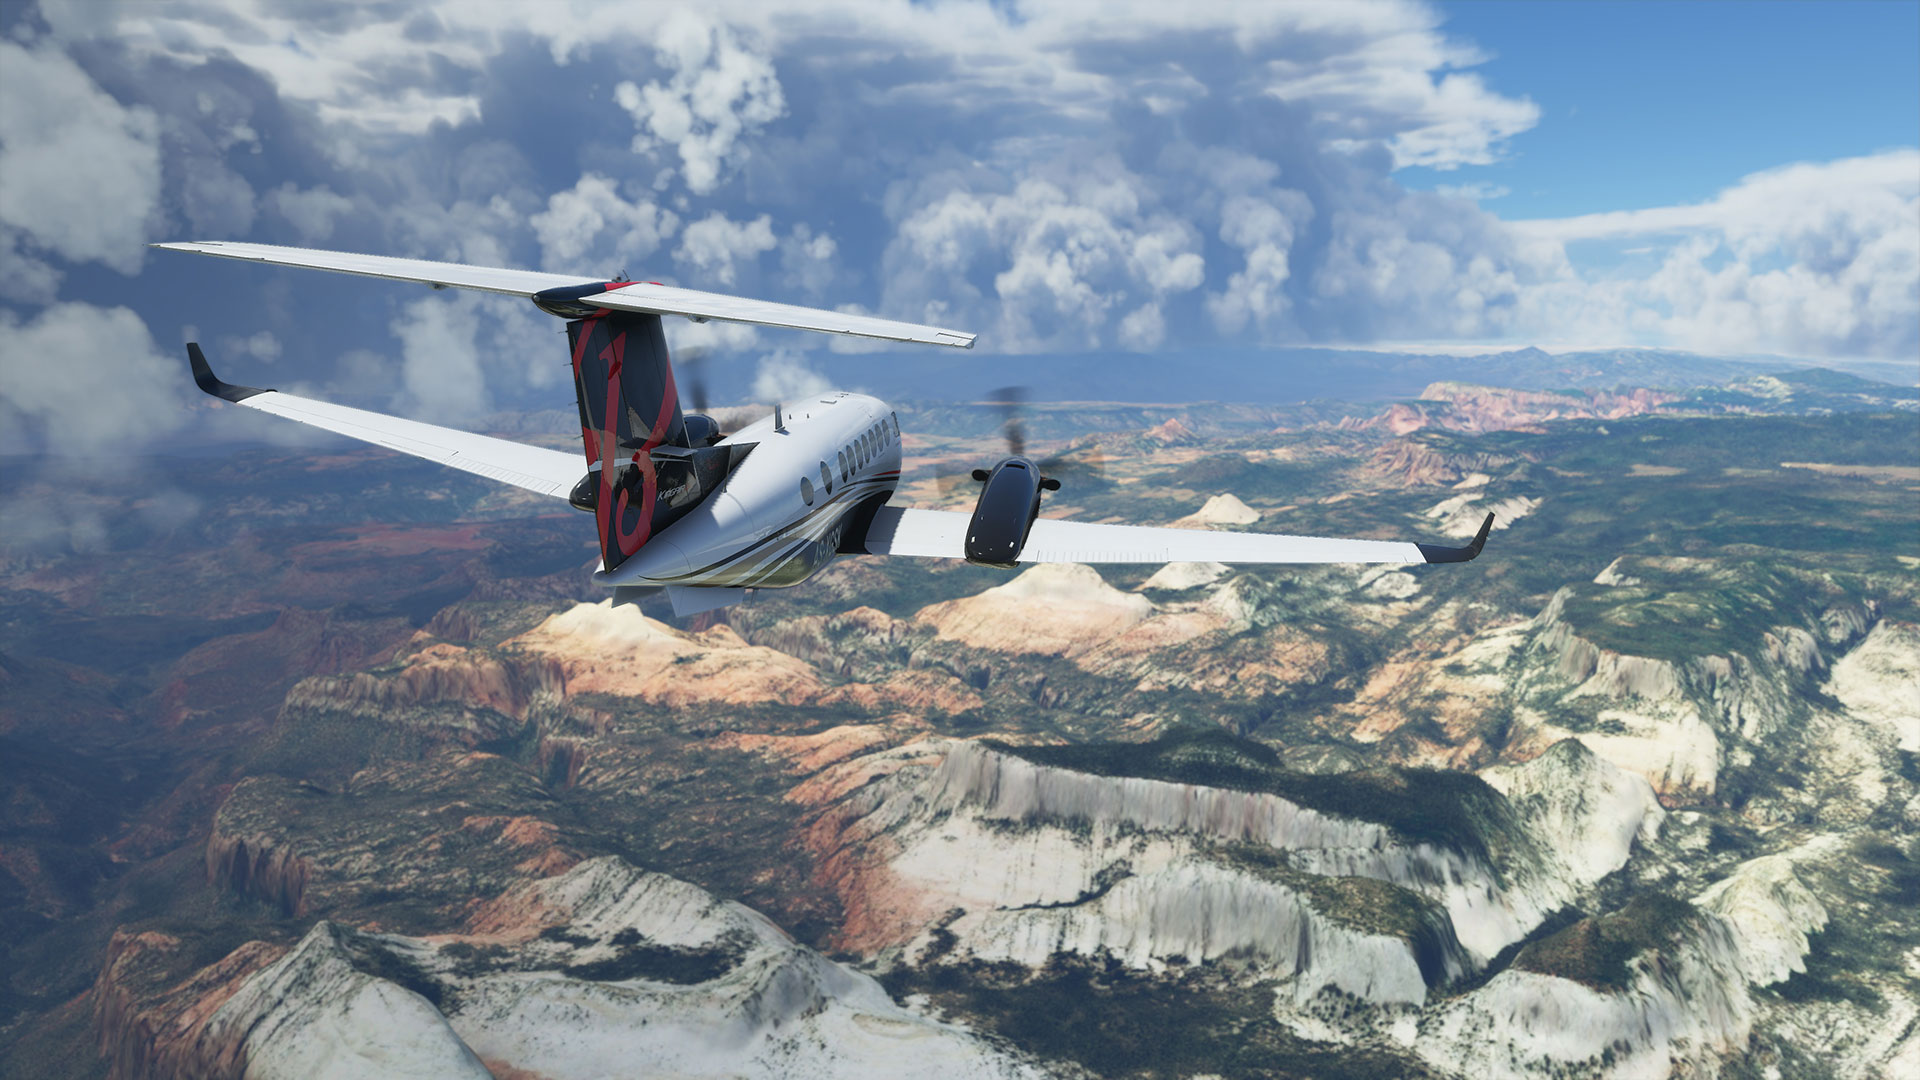 Microsoft Flight Simulator Xbox One